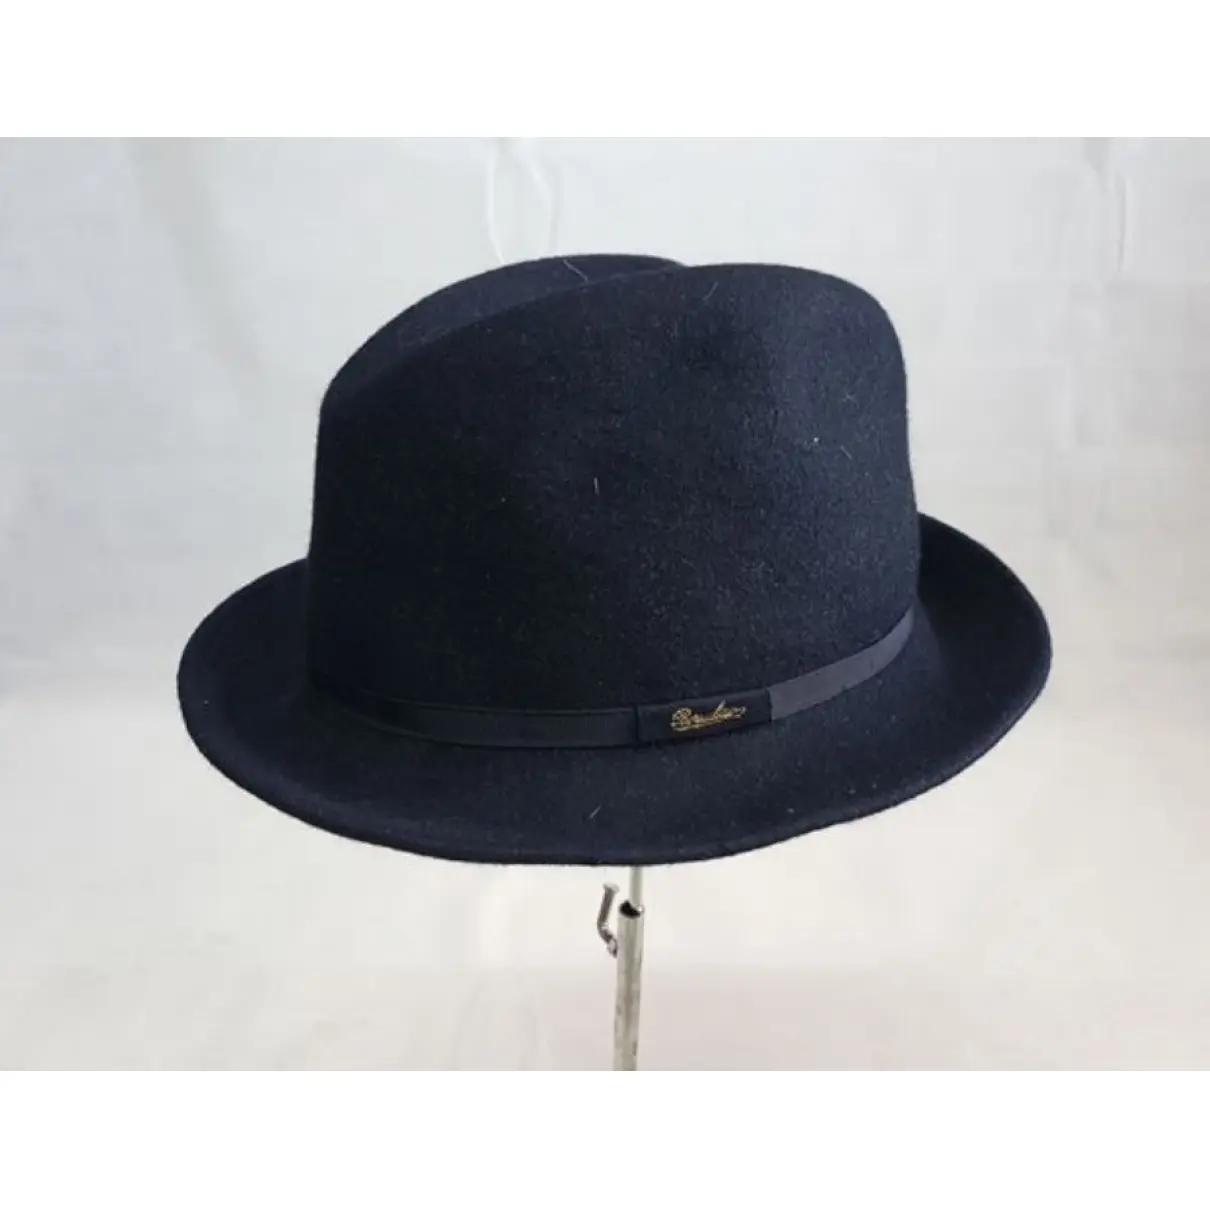 Borsalino Wool hat for sale - Vintage